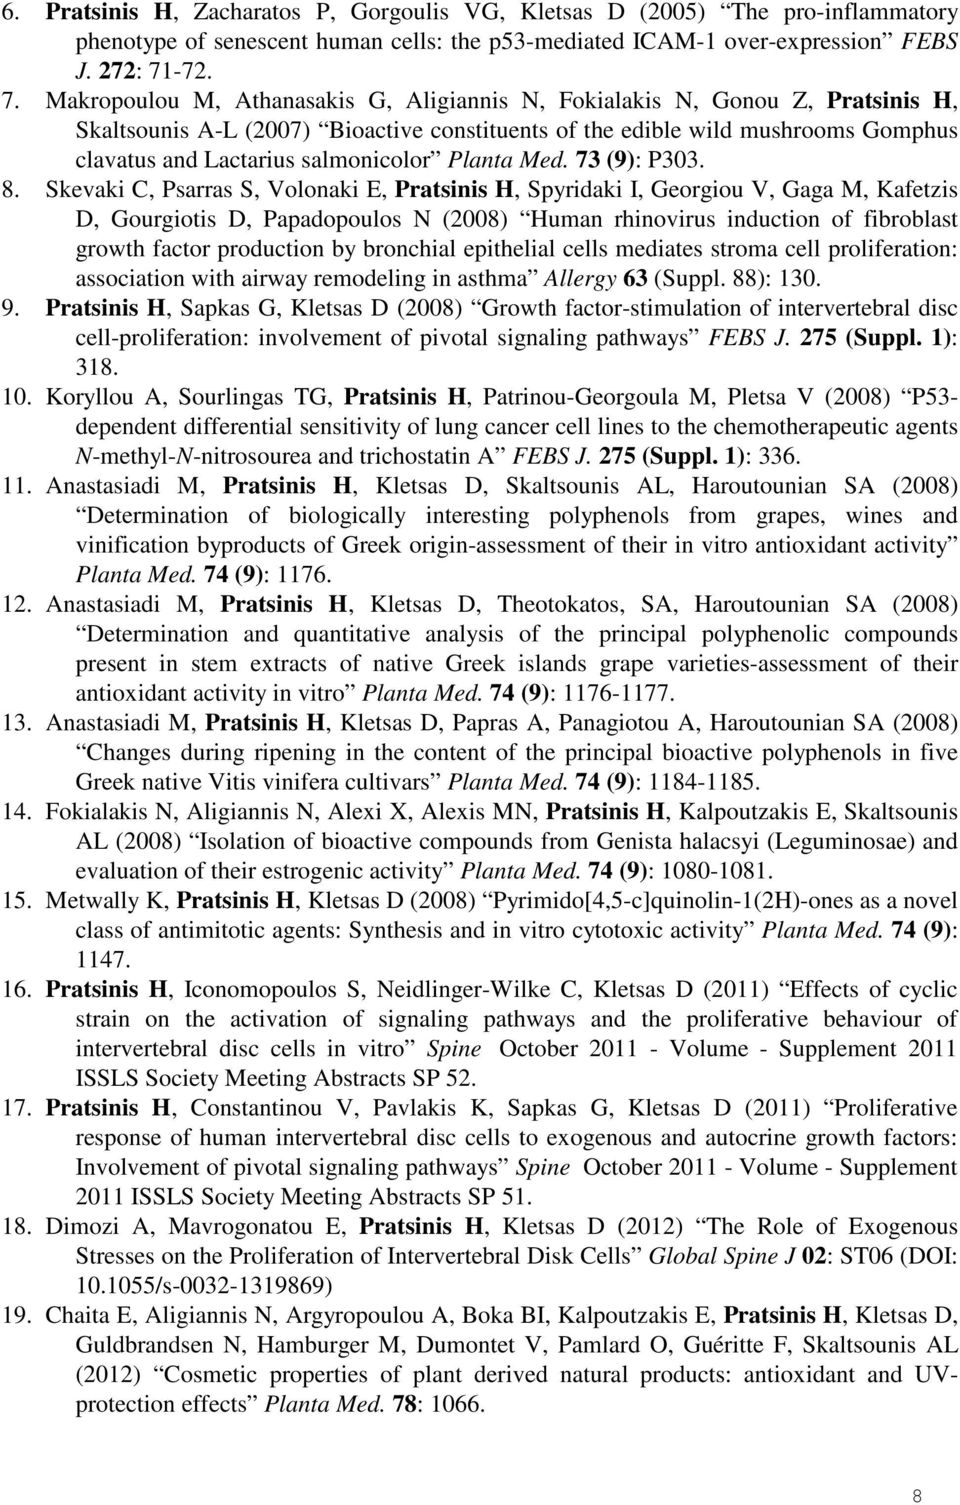 Makropoulou M, Athanasakis G, Aligiannis N, Fokialakis N, Gonou Z, Pratsinis H, Skaltsounis A-L (2007) Bioactive constituents of the edible wild mushrooms Gomphus clavatus and Lactarius salmonicolor